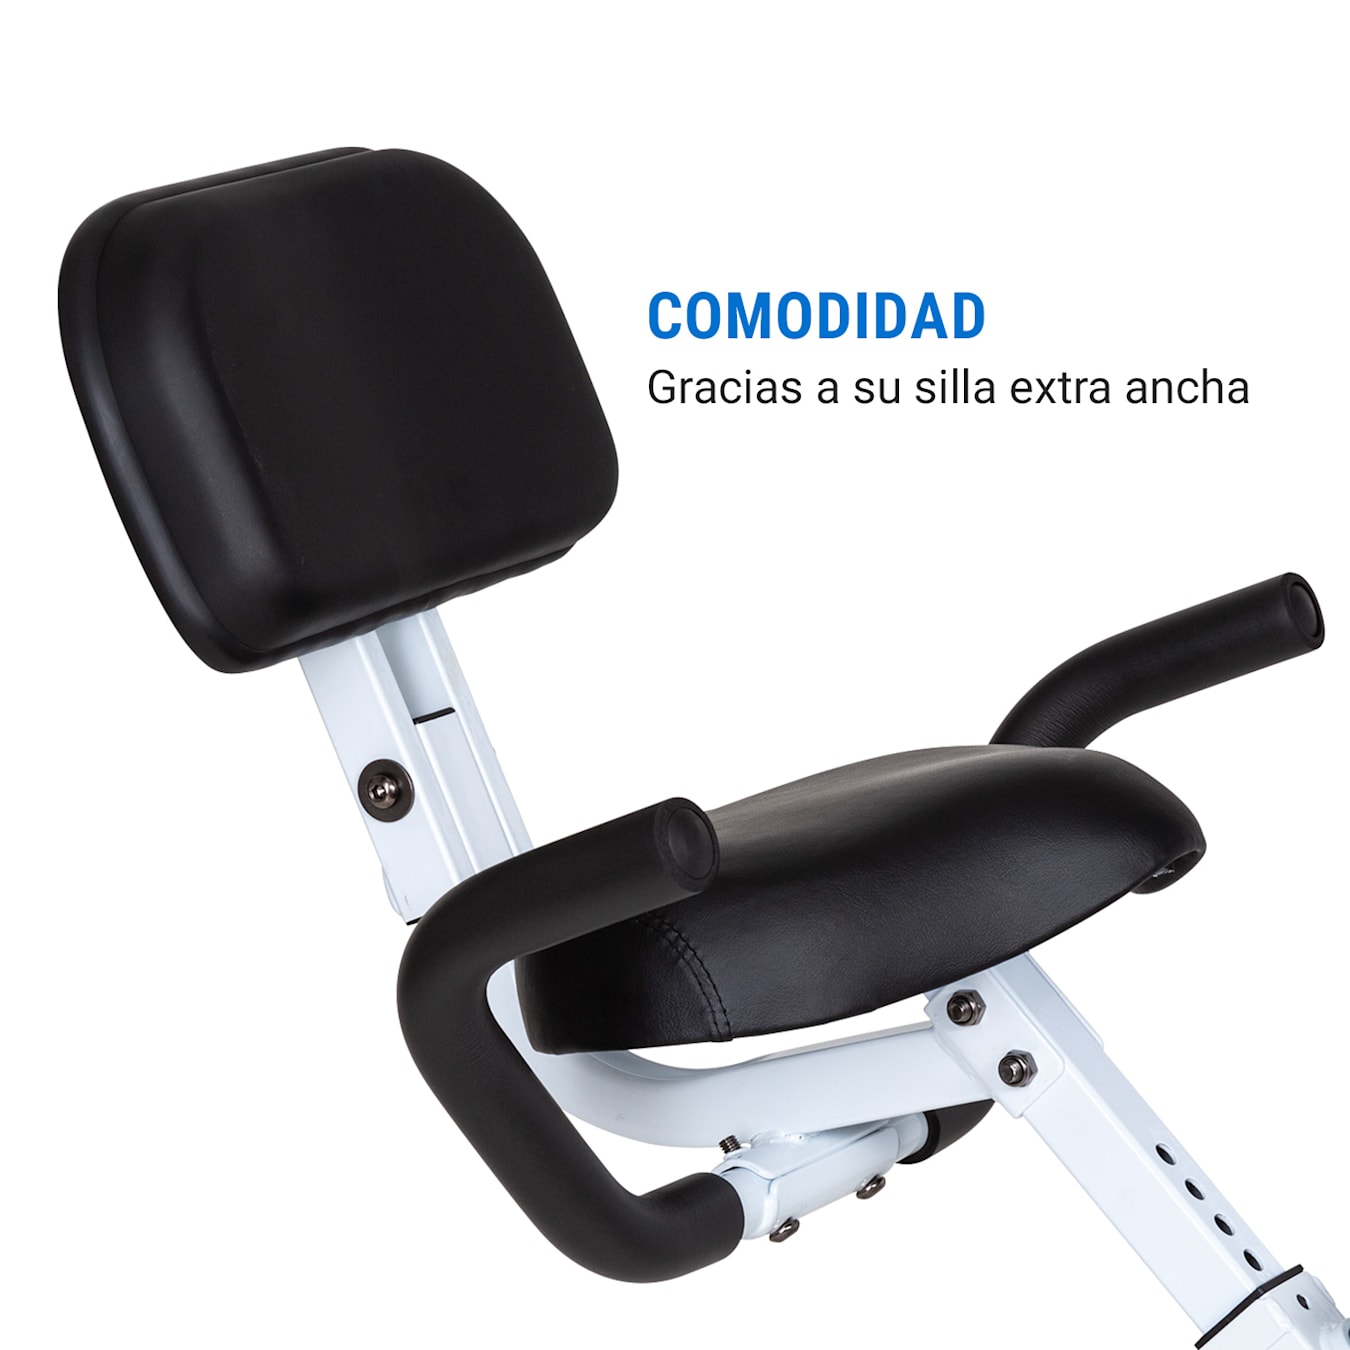 Bicicleta estática Azura Desk Bike, X-Bike / cardiotrainer / home office, masa de volante de inercia: 7,5 kg, MagResist: resistencia magnética (8  niveles), cómodas asas de asiento